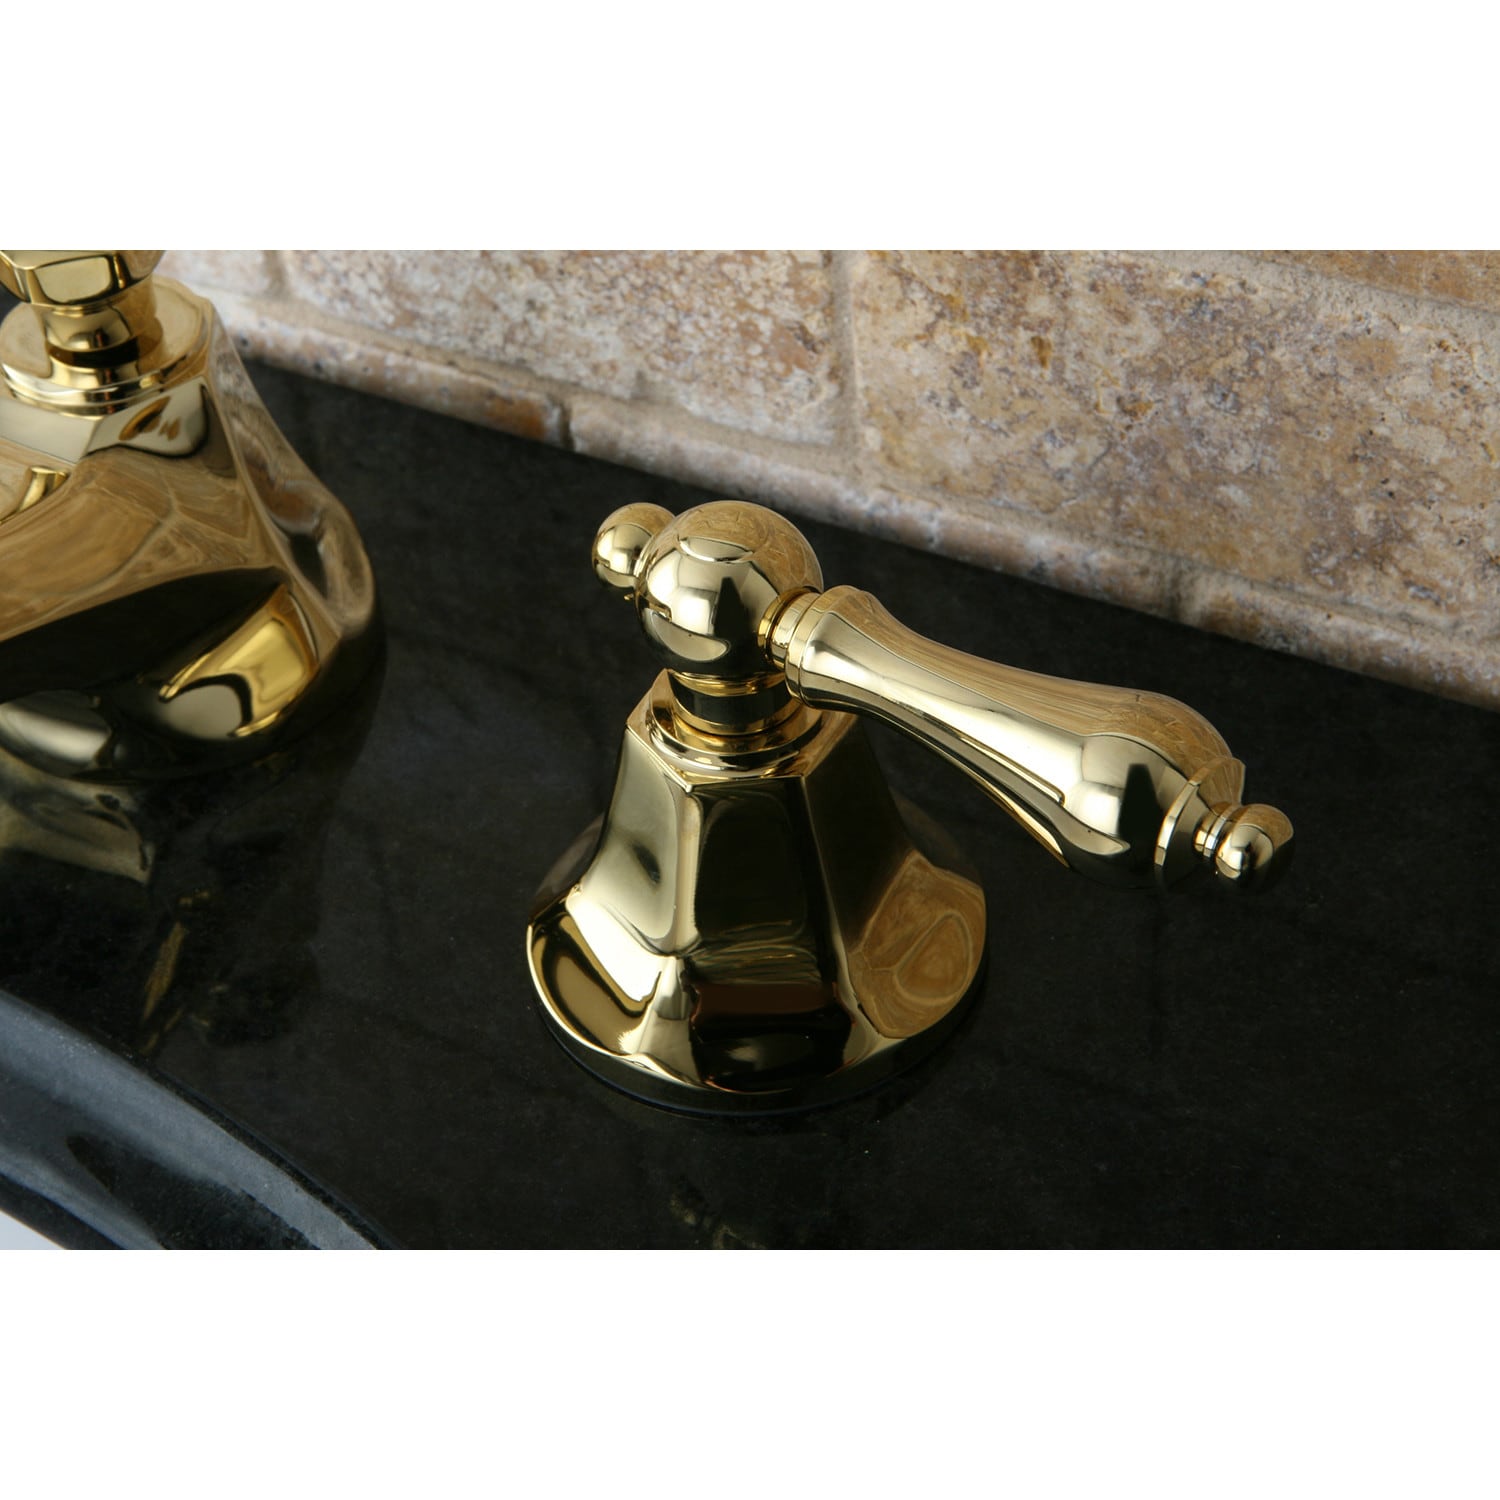 Kingston Brass Vintage Polished Brass Widespread 2-handle Bathroom